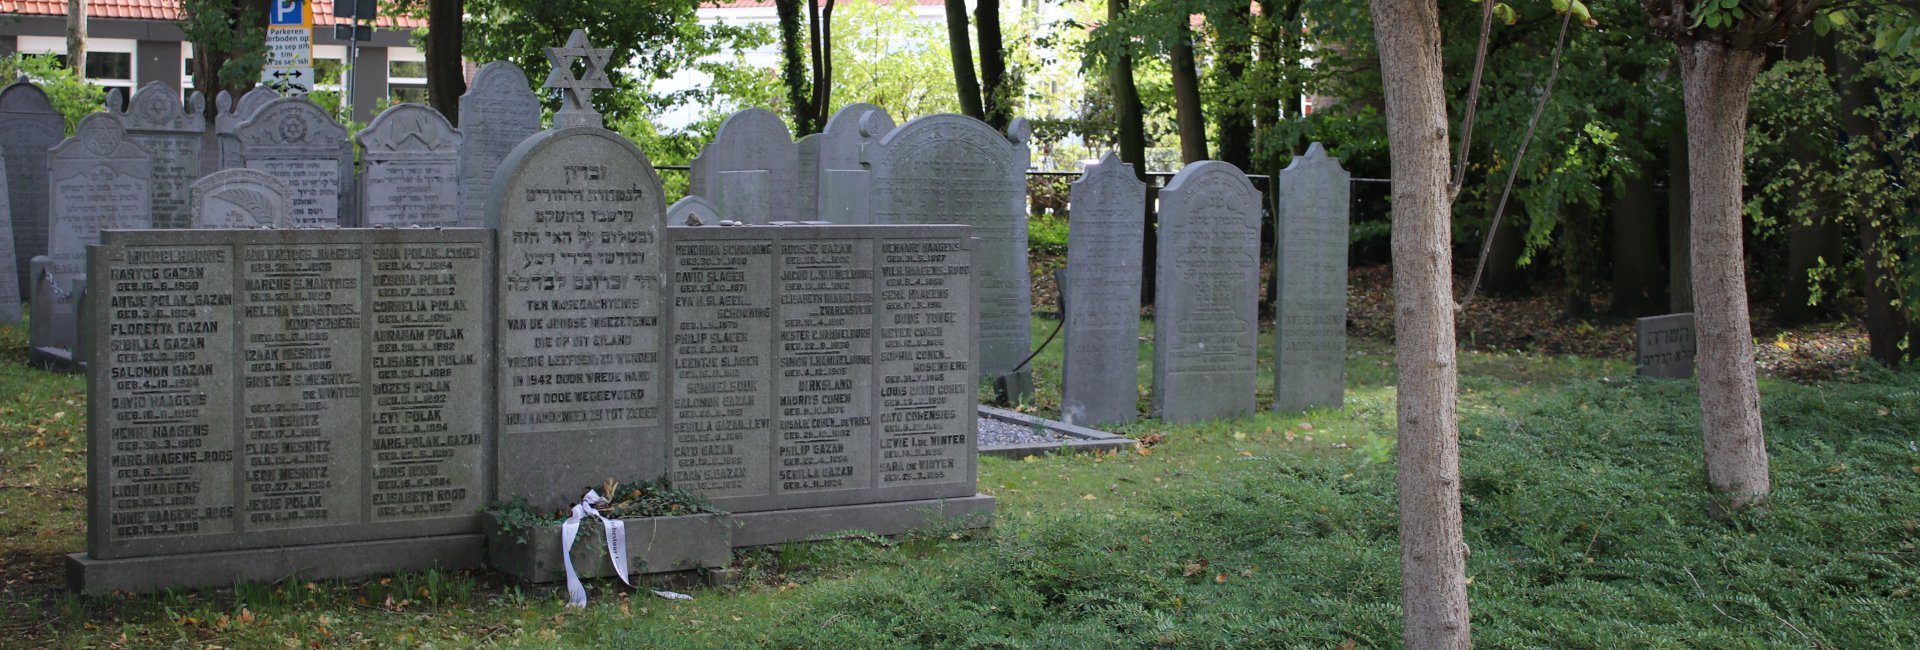 Joodse begraafplaats Middelharnis